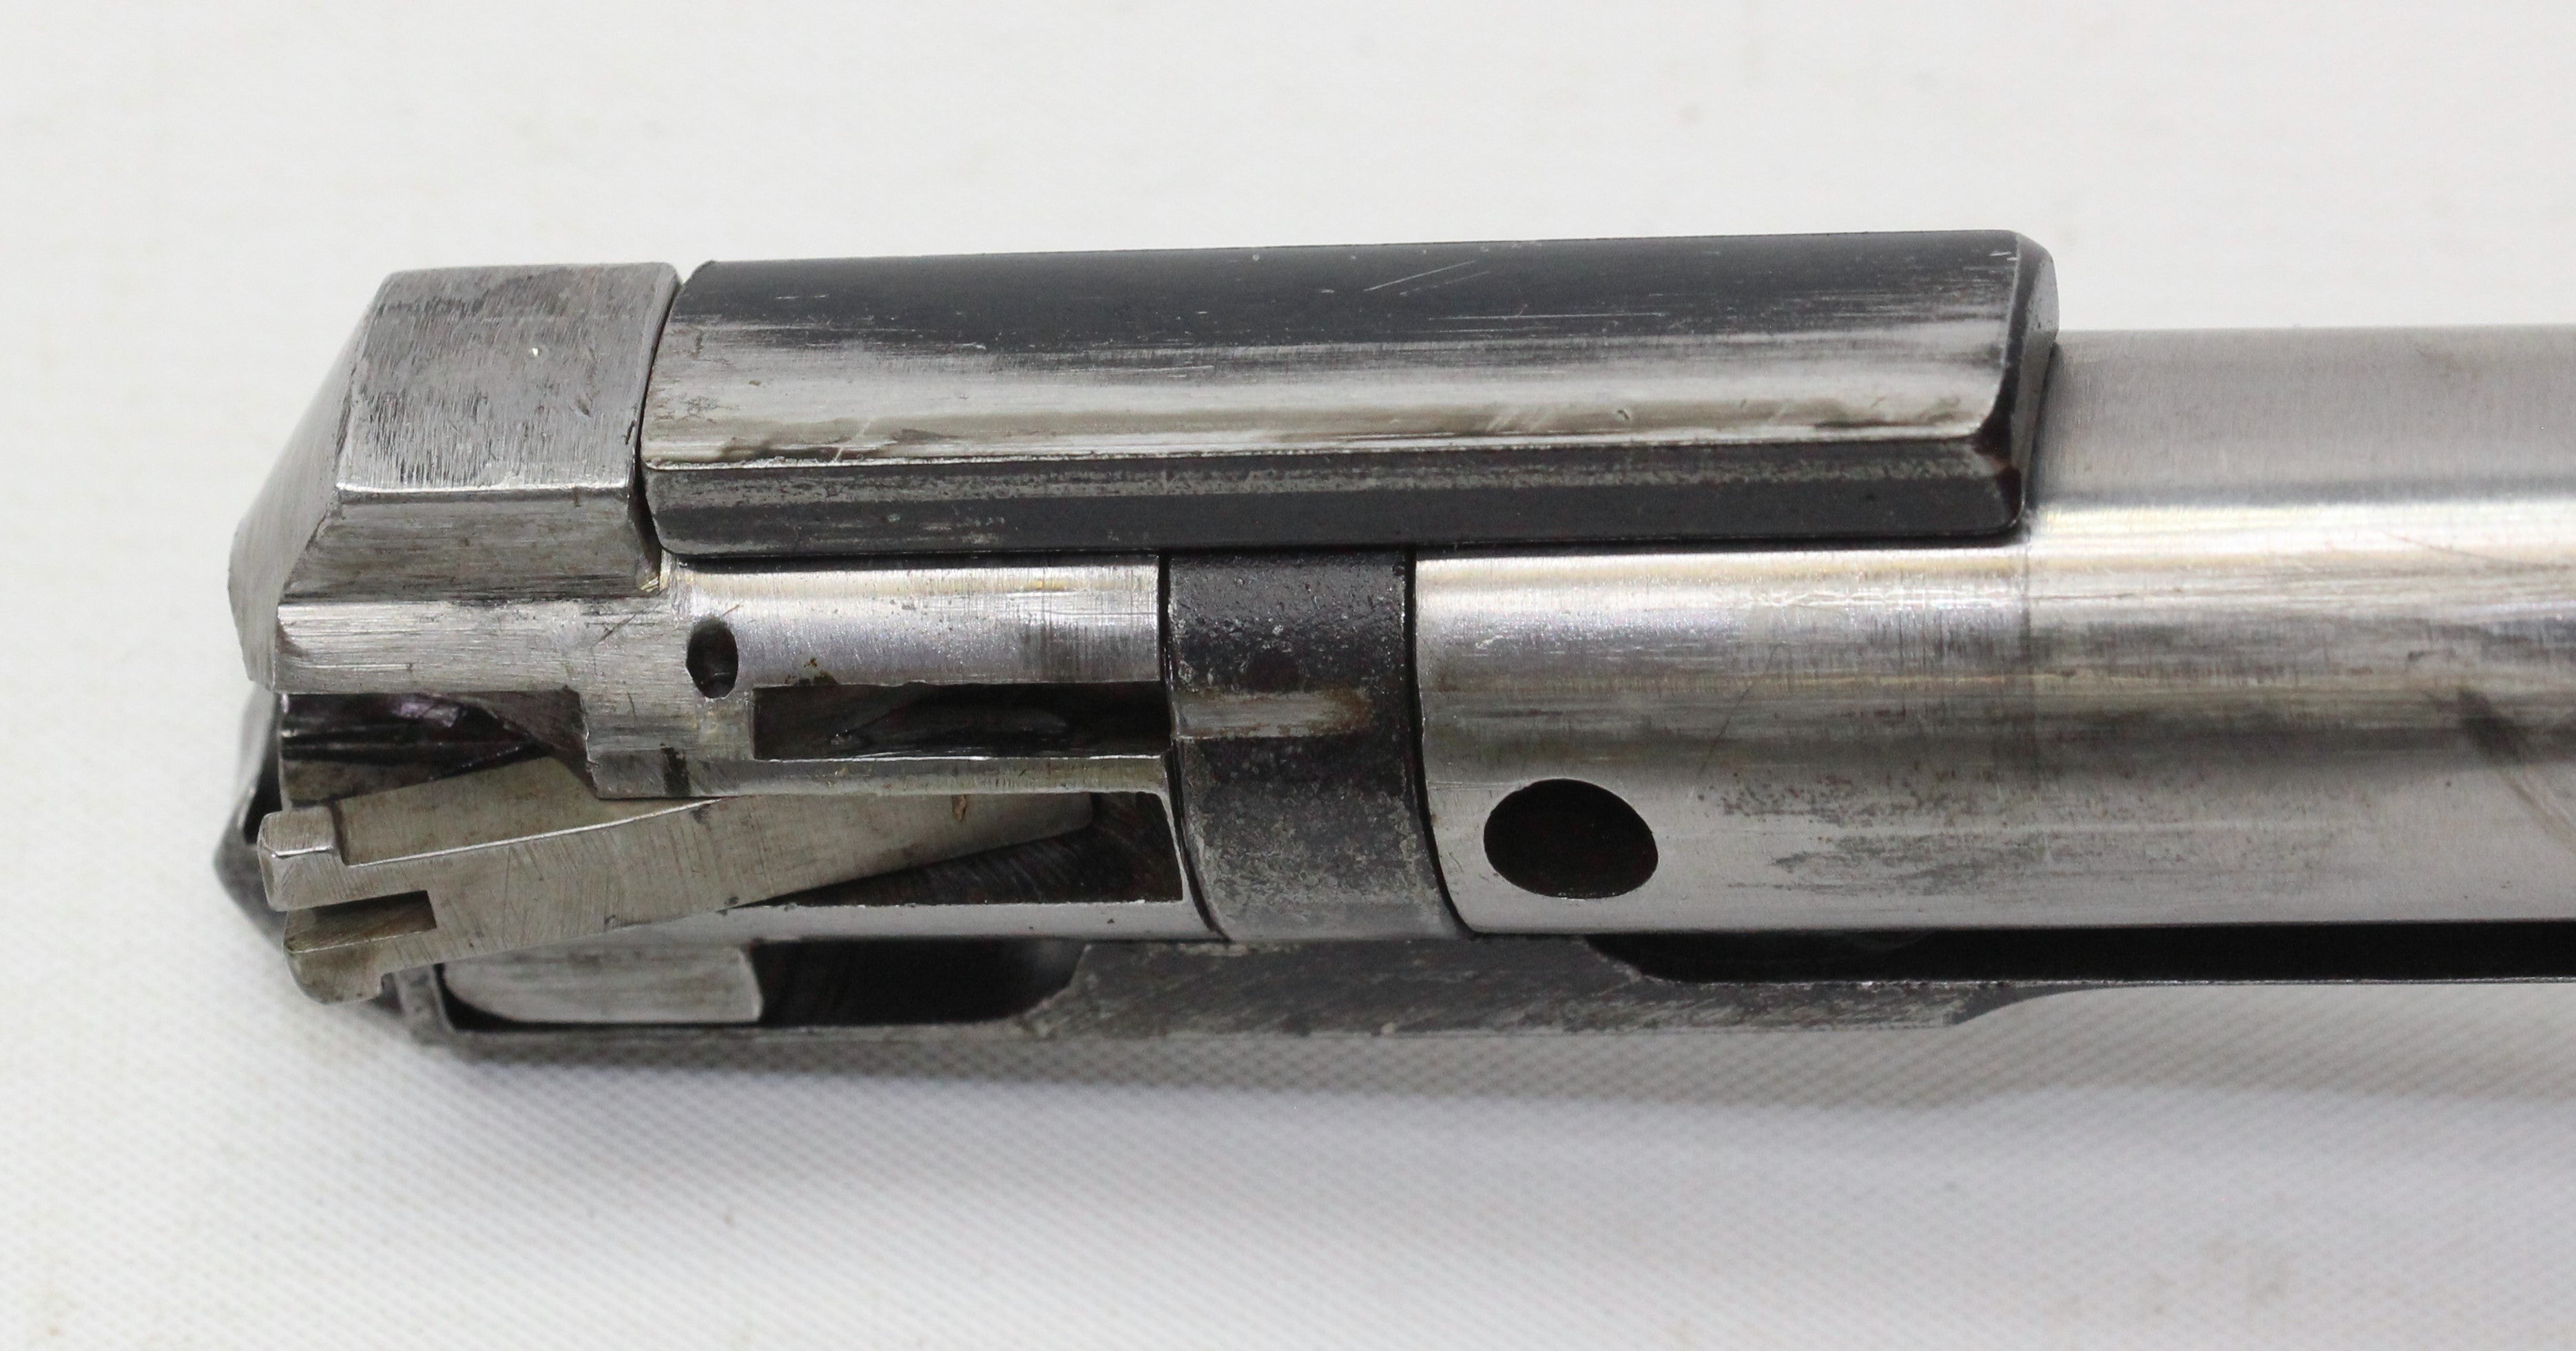 .22 Hornet Standard Rifle - 1937